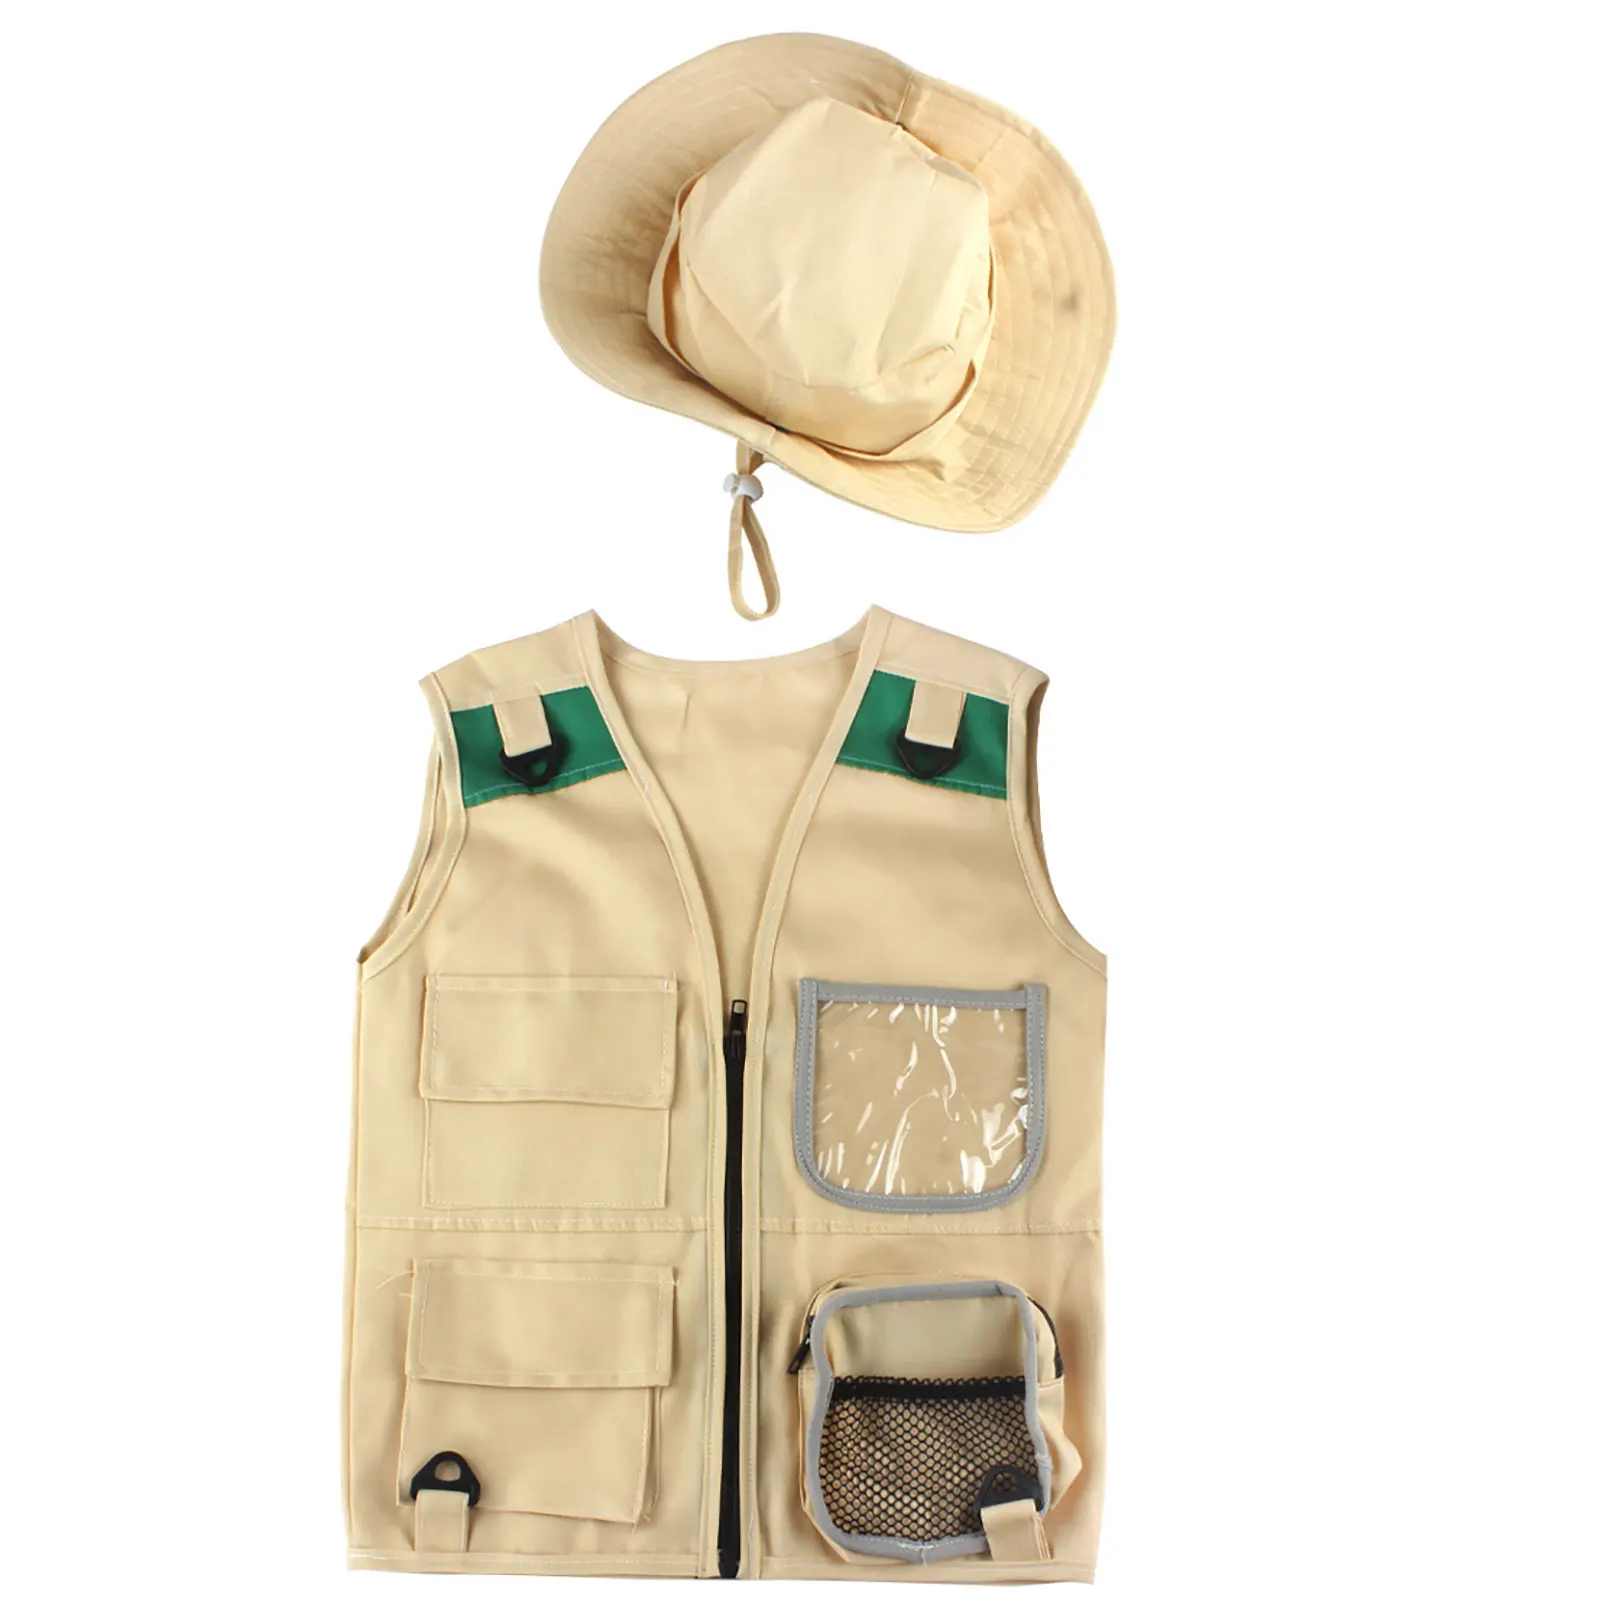 

Cargo Vest And Hat Set Explorer Kit For Kids Scientist Explorer & Gardener As Dress Up Clothes For Little Girls & Boys Ages 3-7